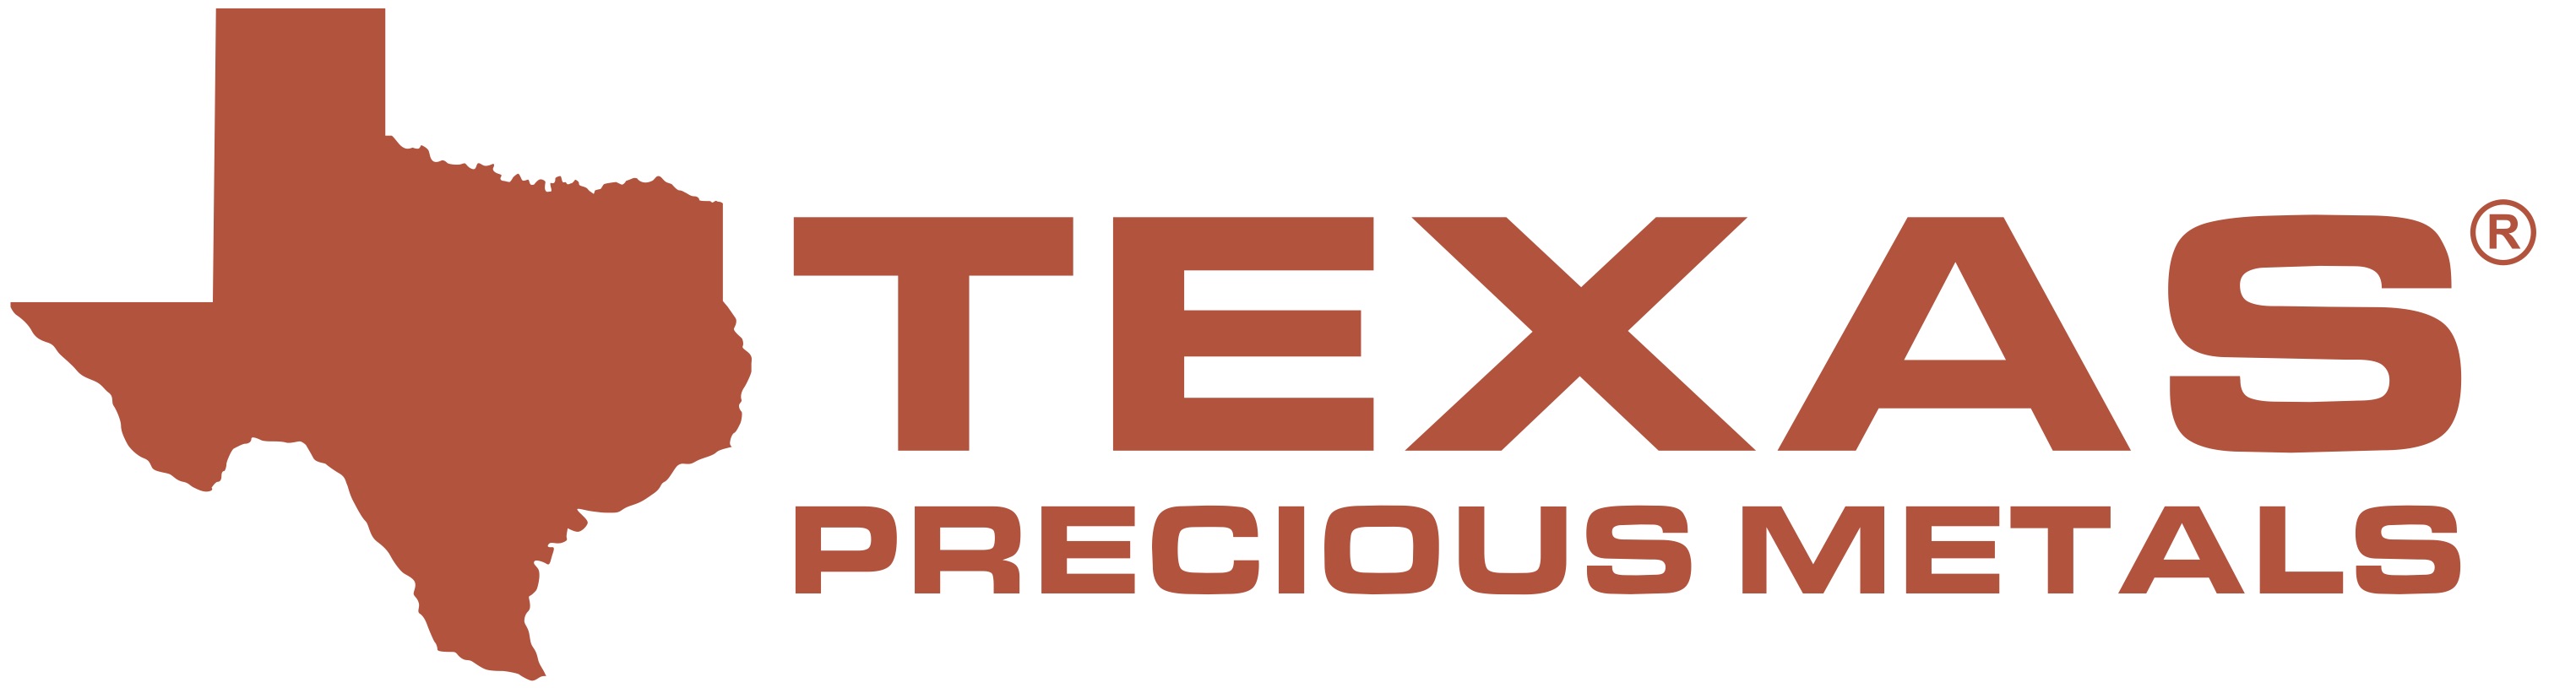 File:Texas Precious Metals Logo.jpg - Wikimedia Commons